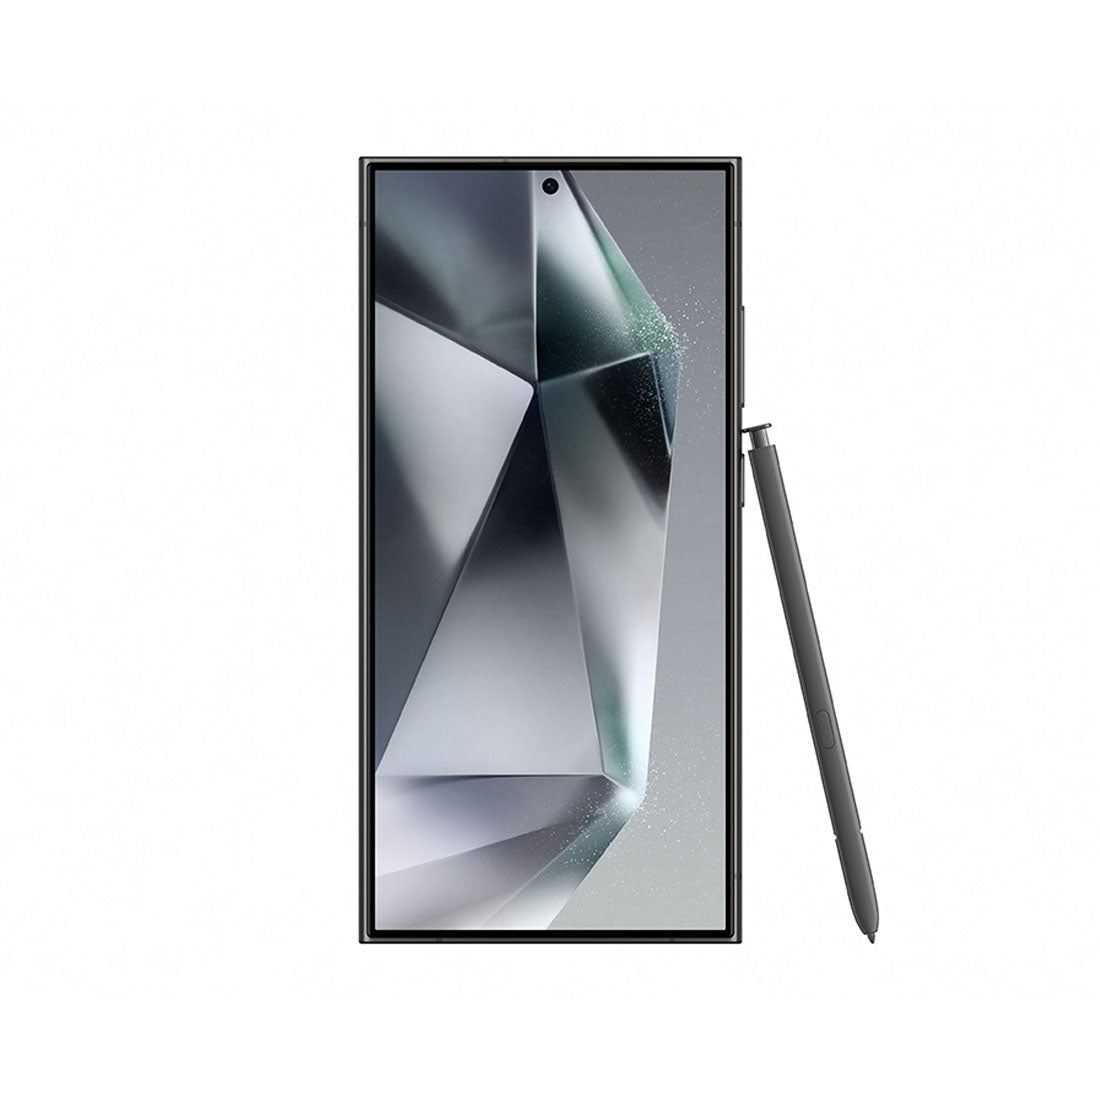 Titanium Black Looks Nice on the Samsung Galaxy S24 Ultra 